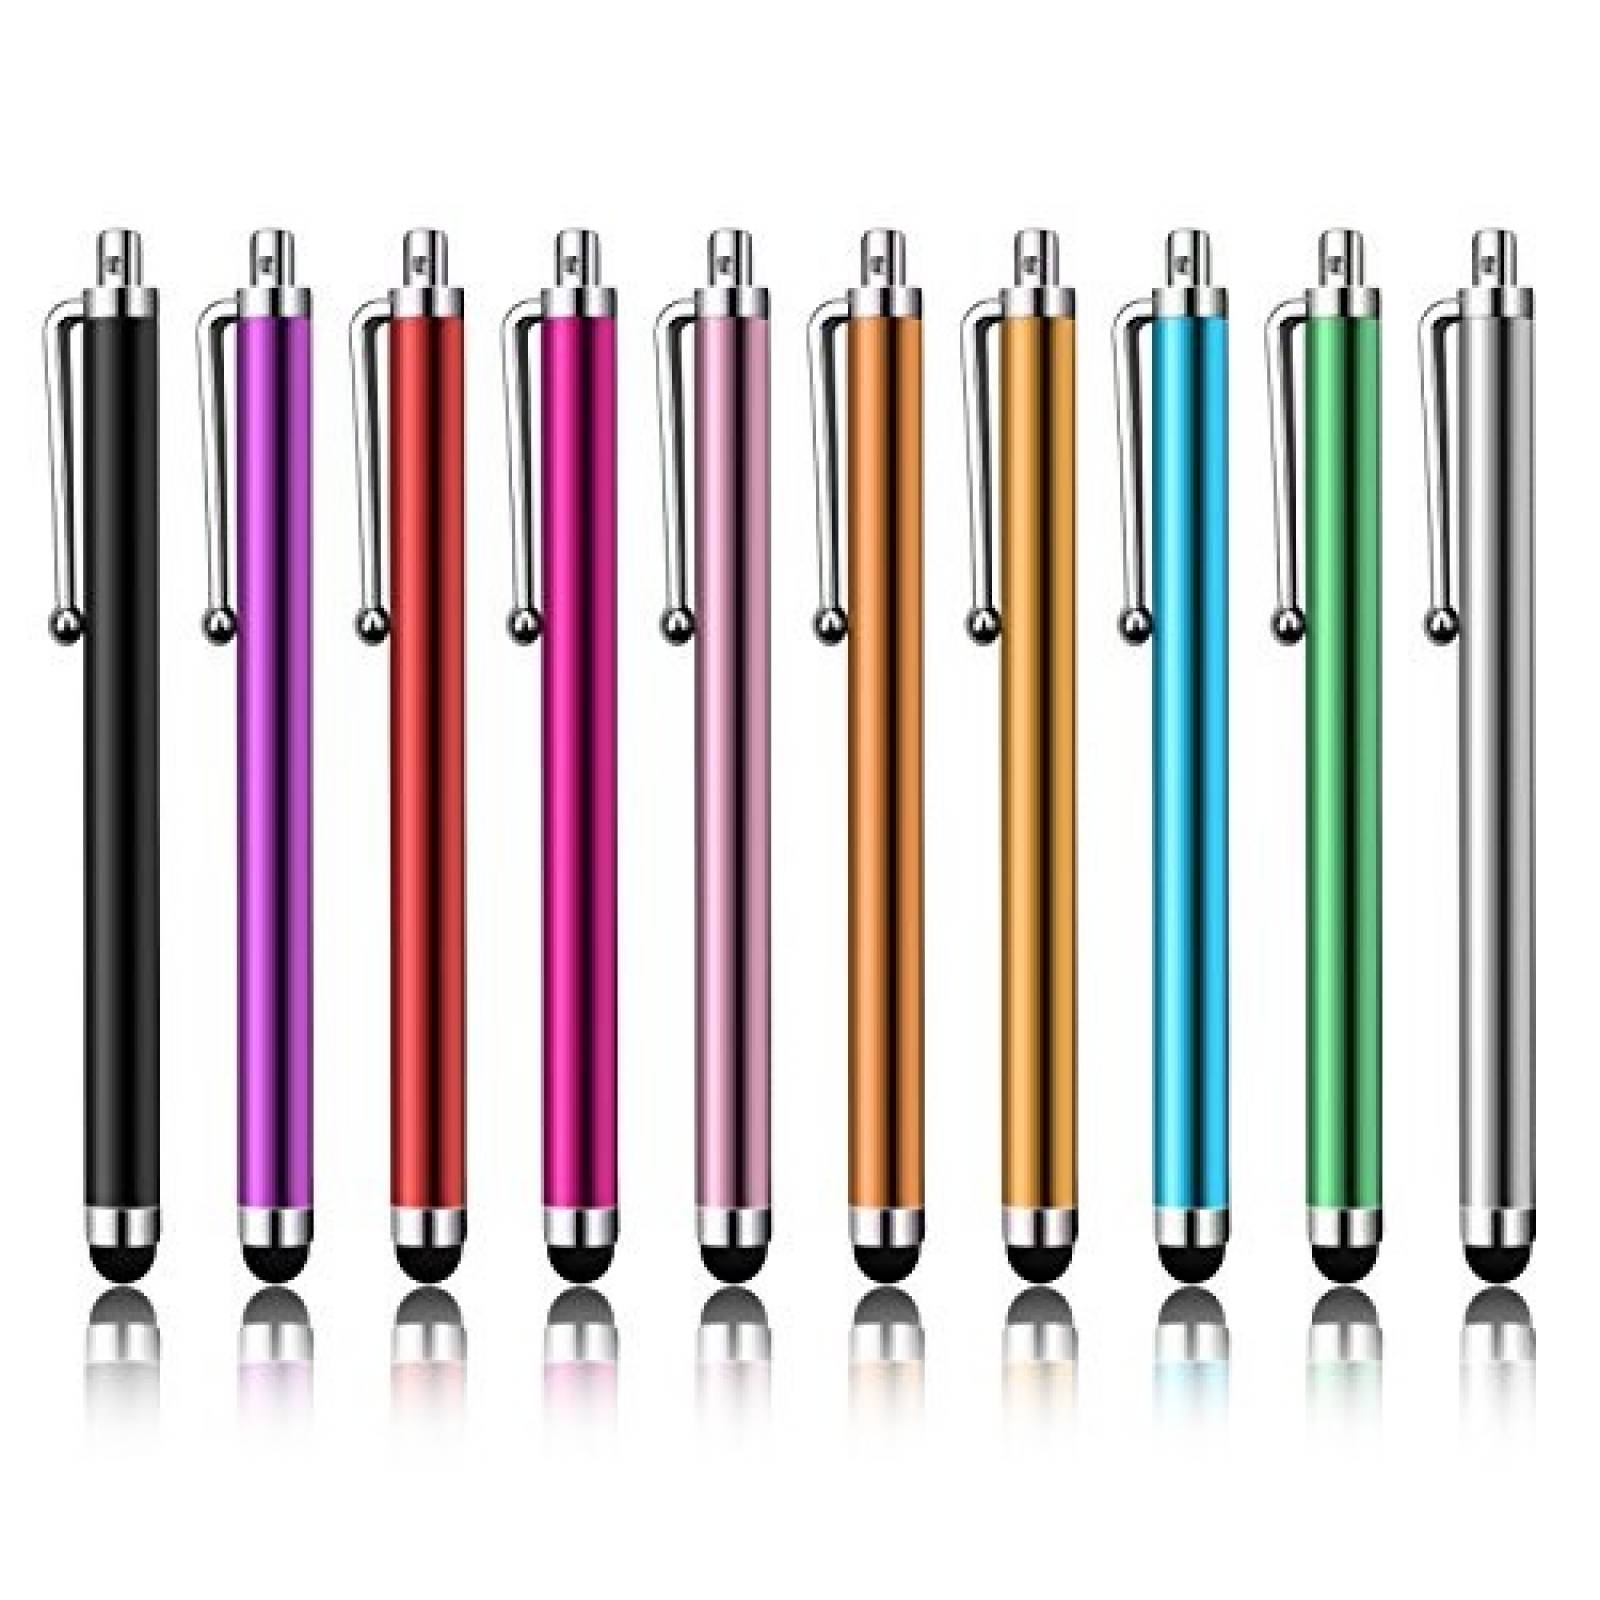 Pluma stylus Liverway 10 piezas colores varios universal